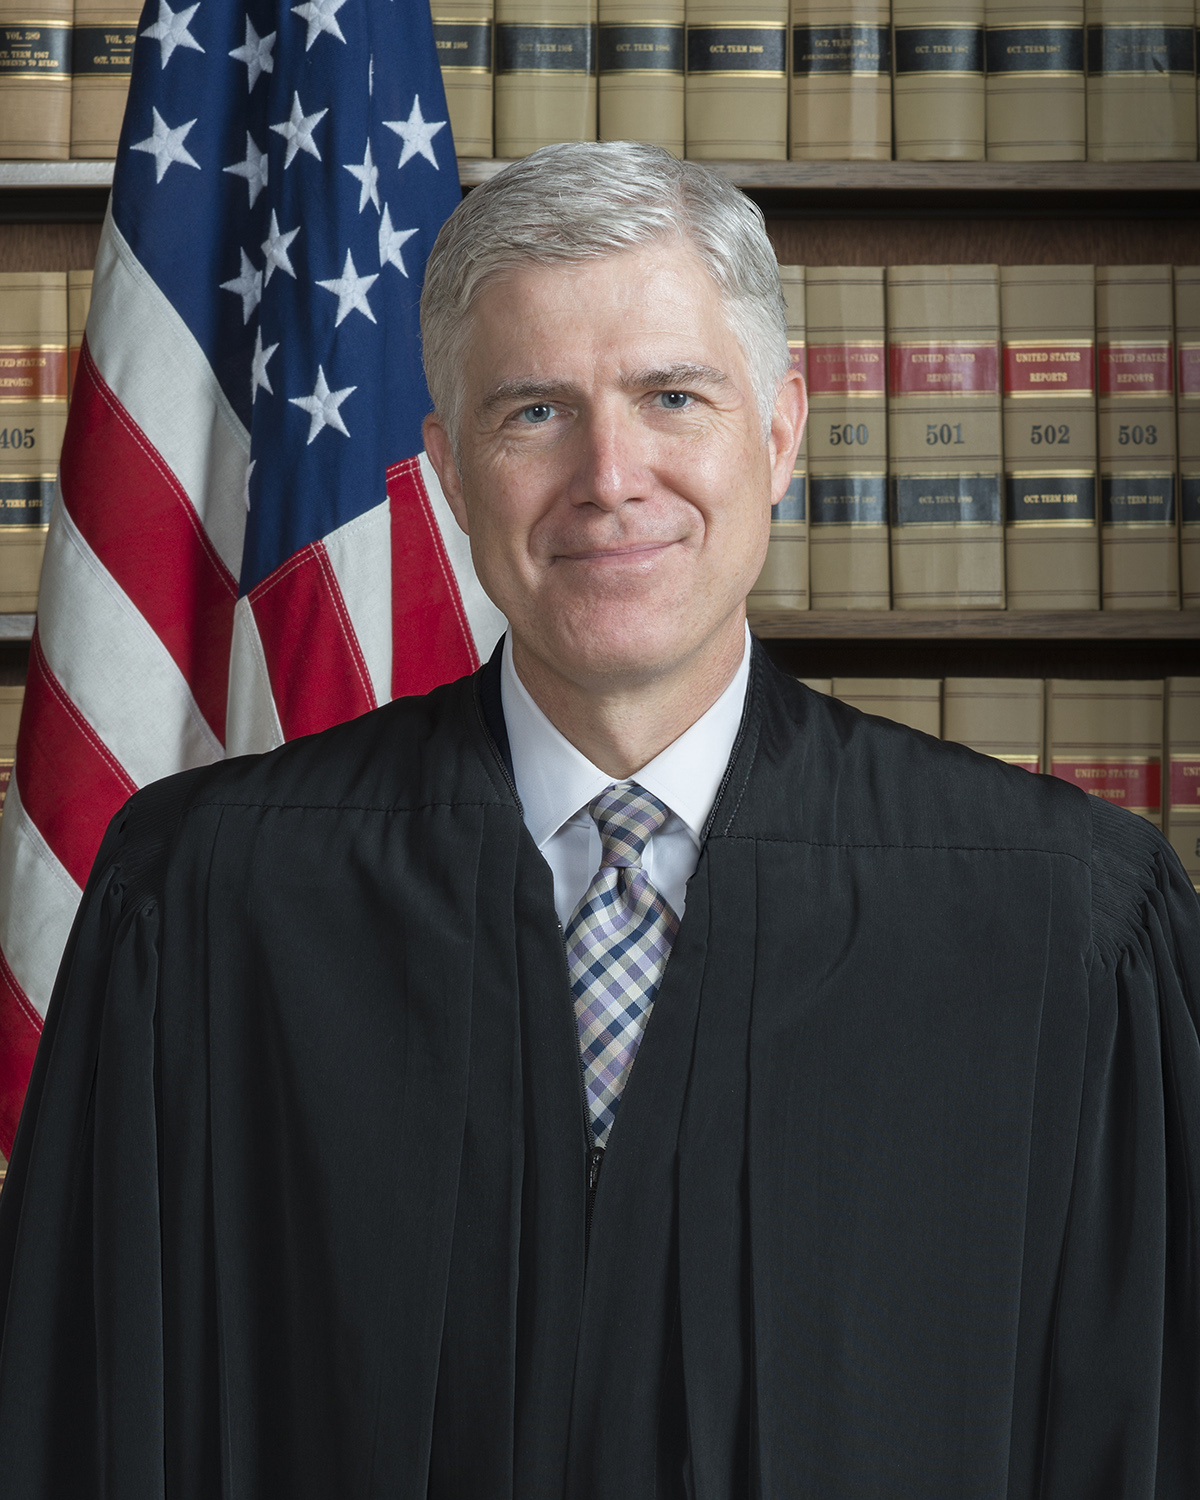 Neil M. Gorsuch, Associate Justice